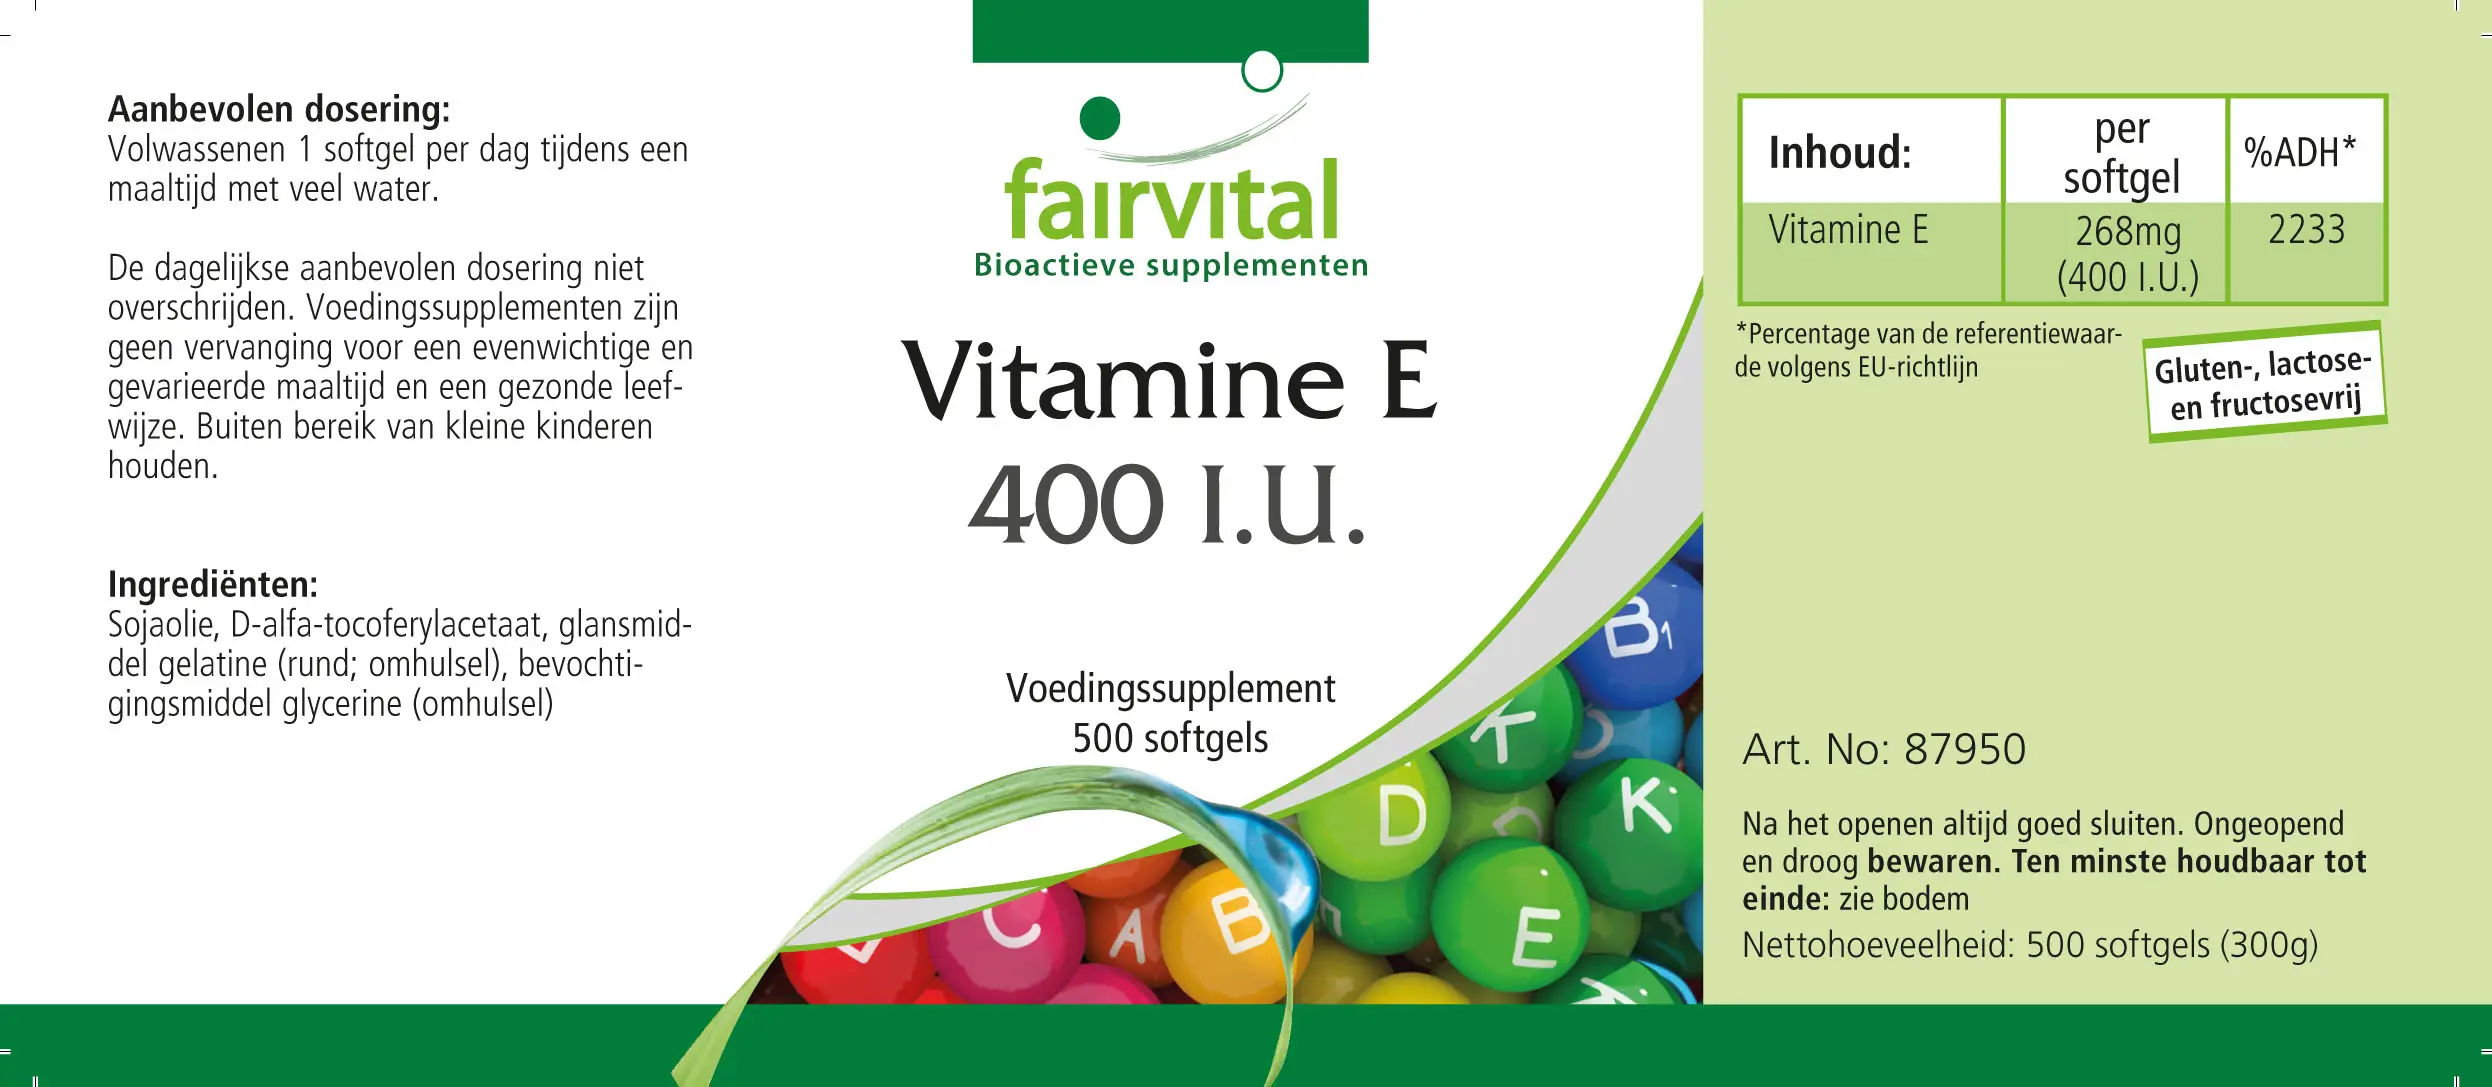 Vitamina E 400 I.E. bote grande - 500 Softgels